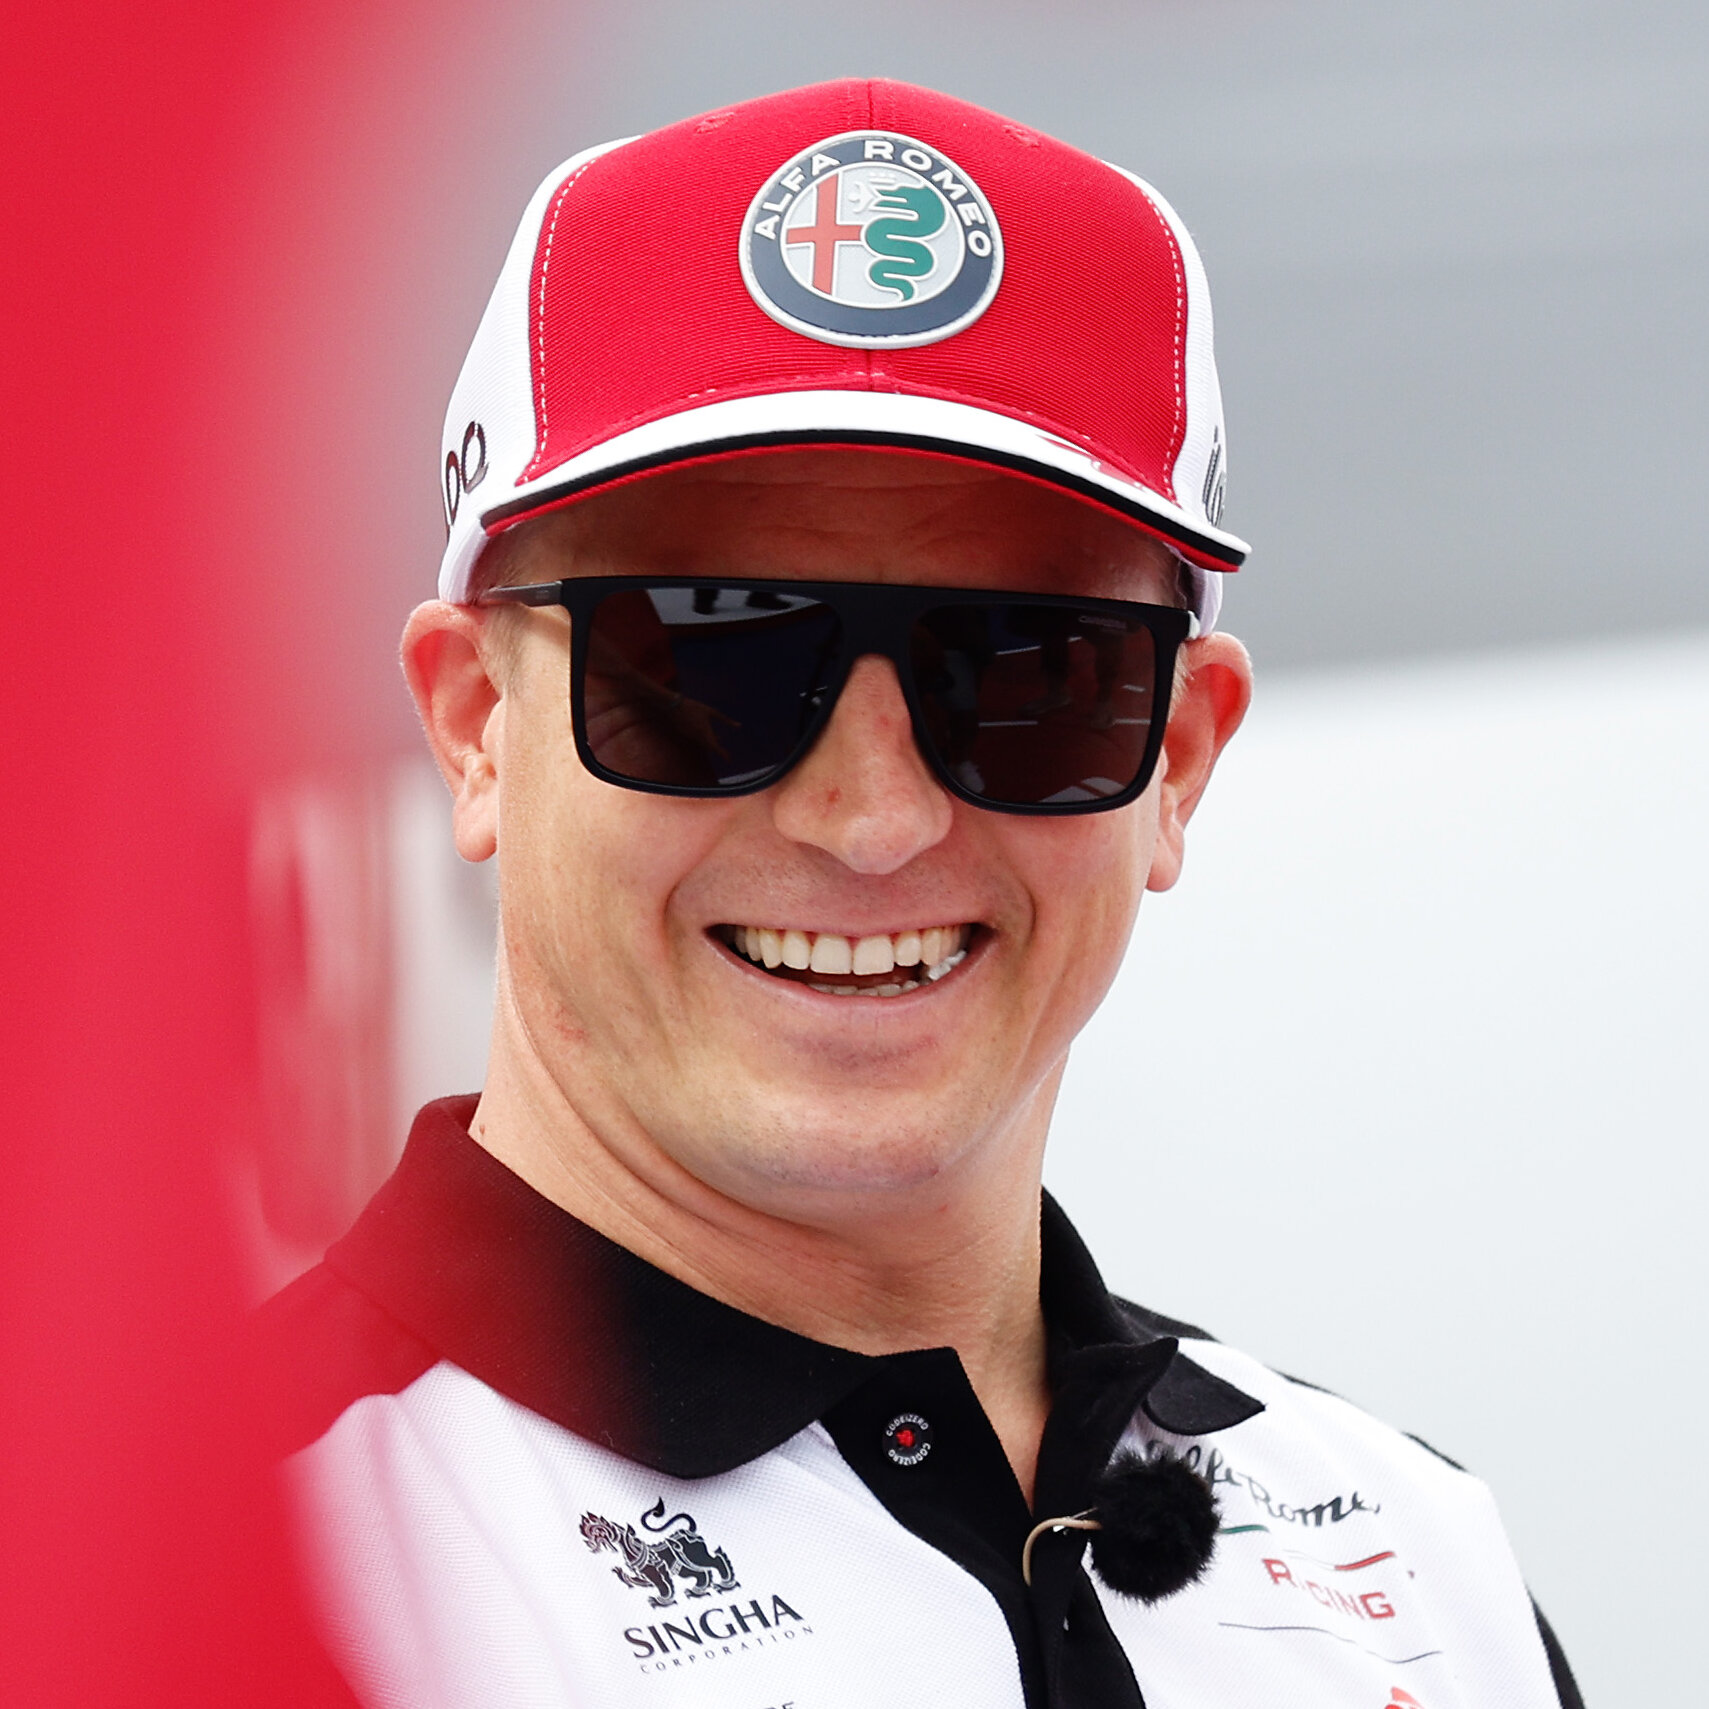 Kimi Raikkonen Net Worth $250 Mill - The World Champion  To Formula One